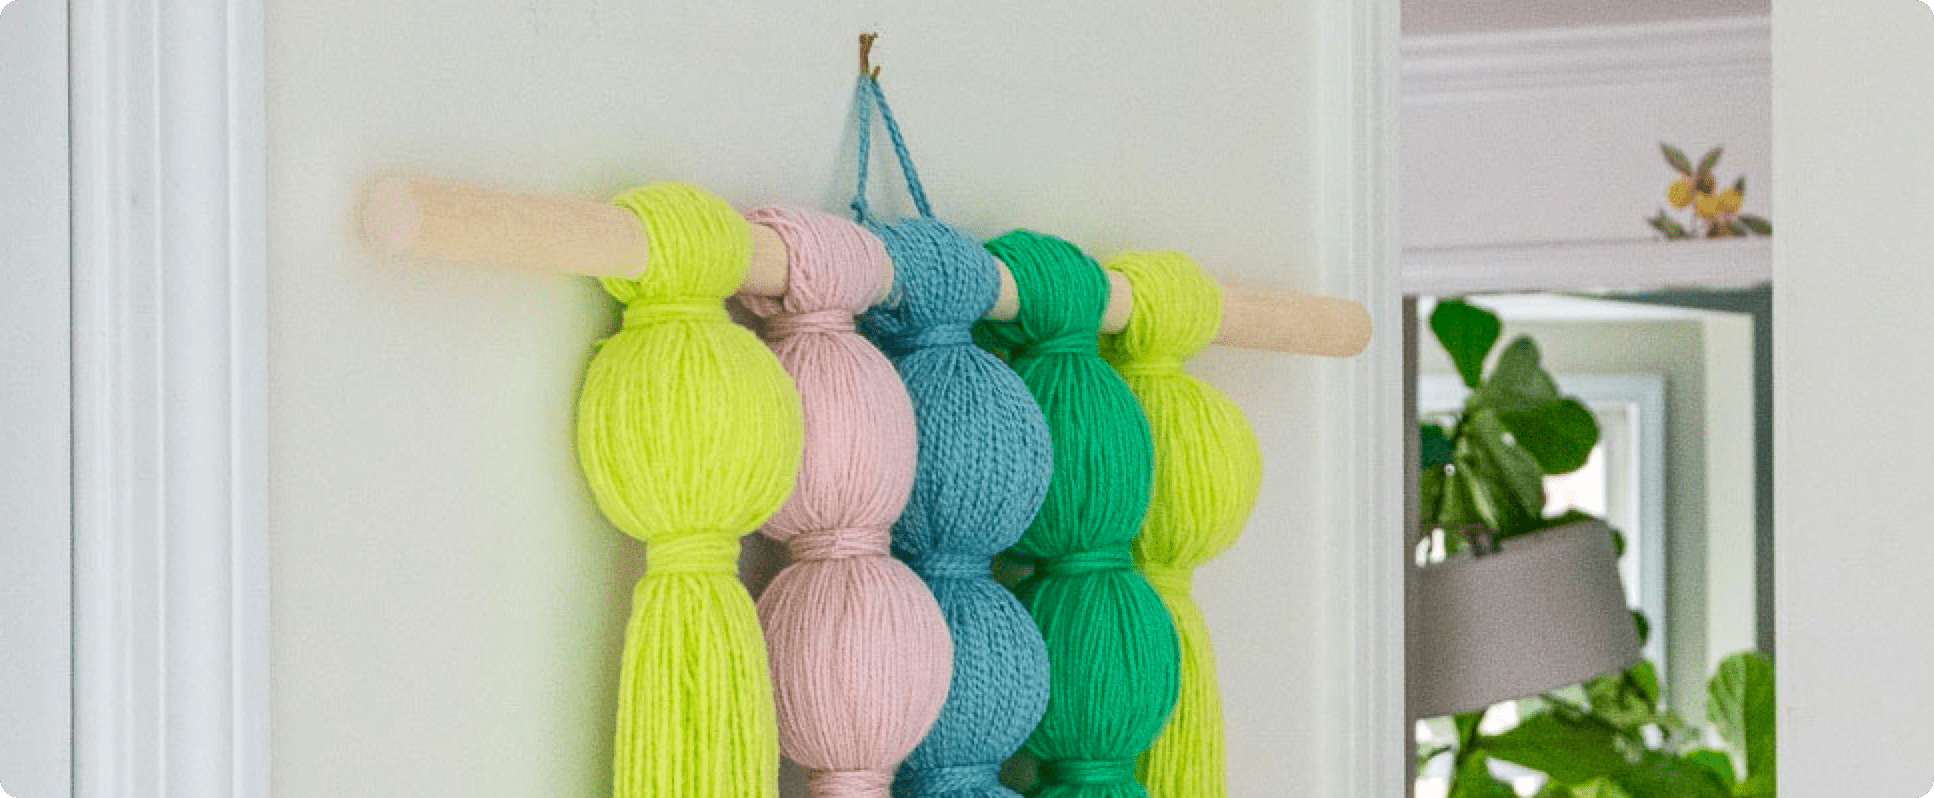 How to Make a Yarn Ball Wall Hanging